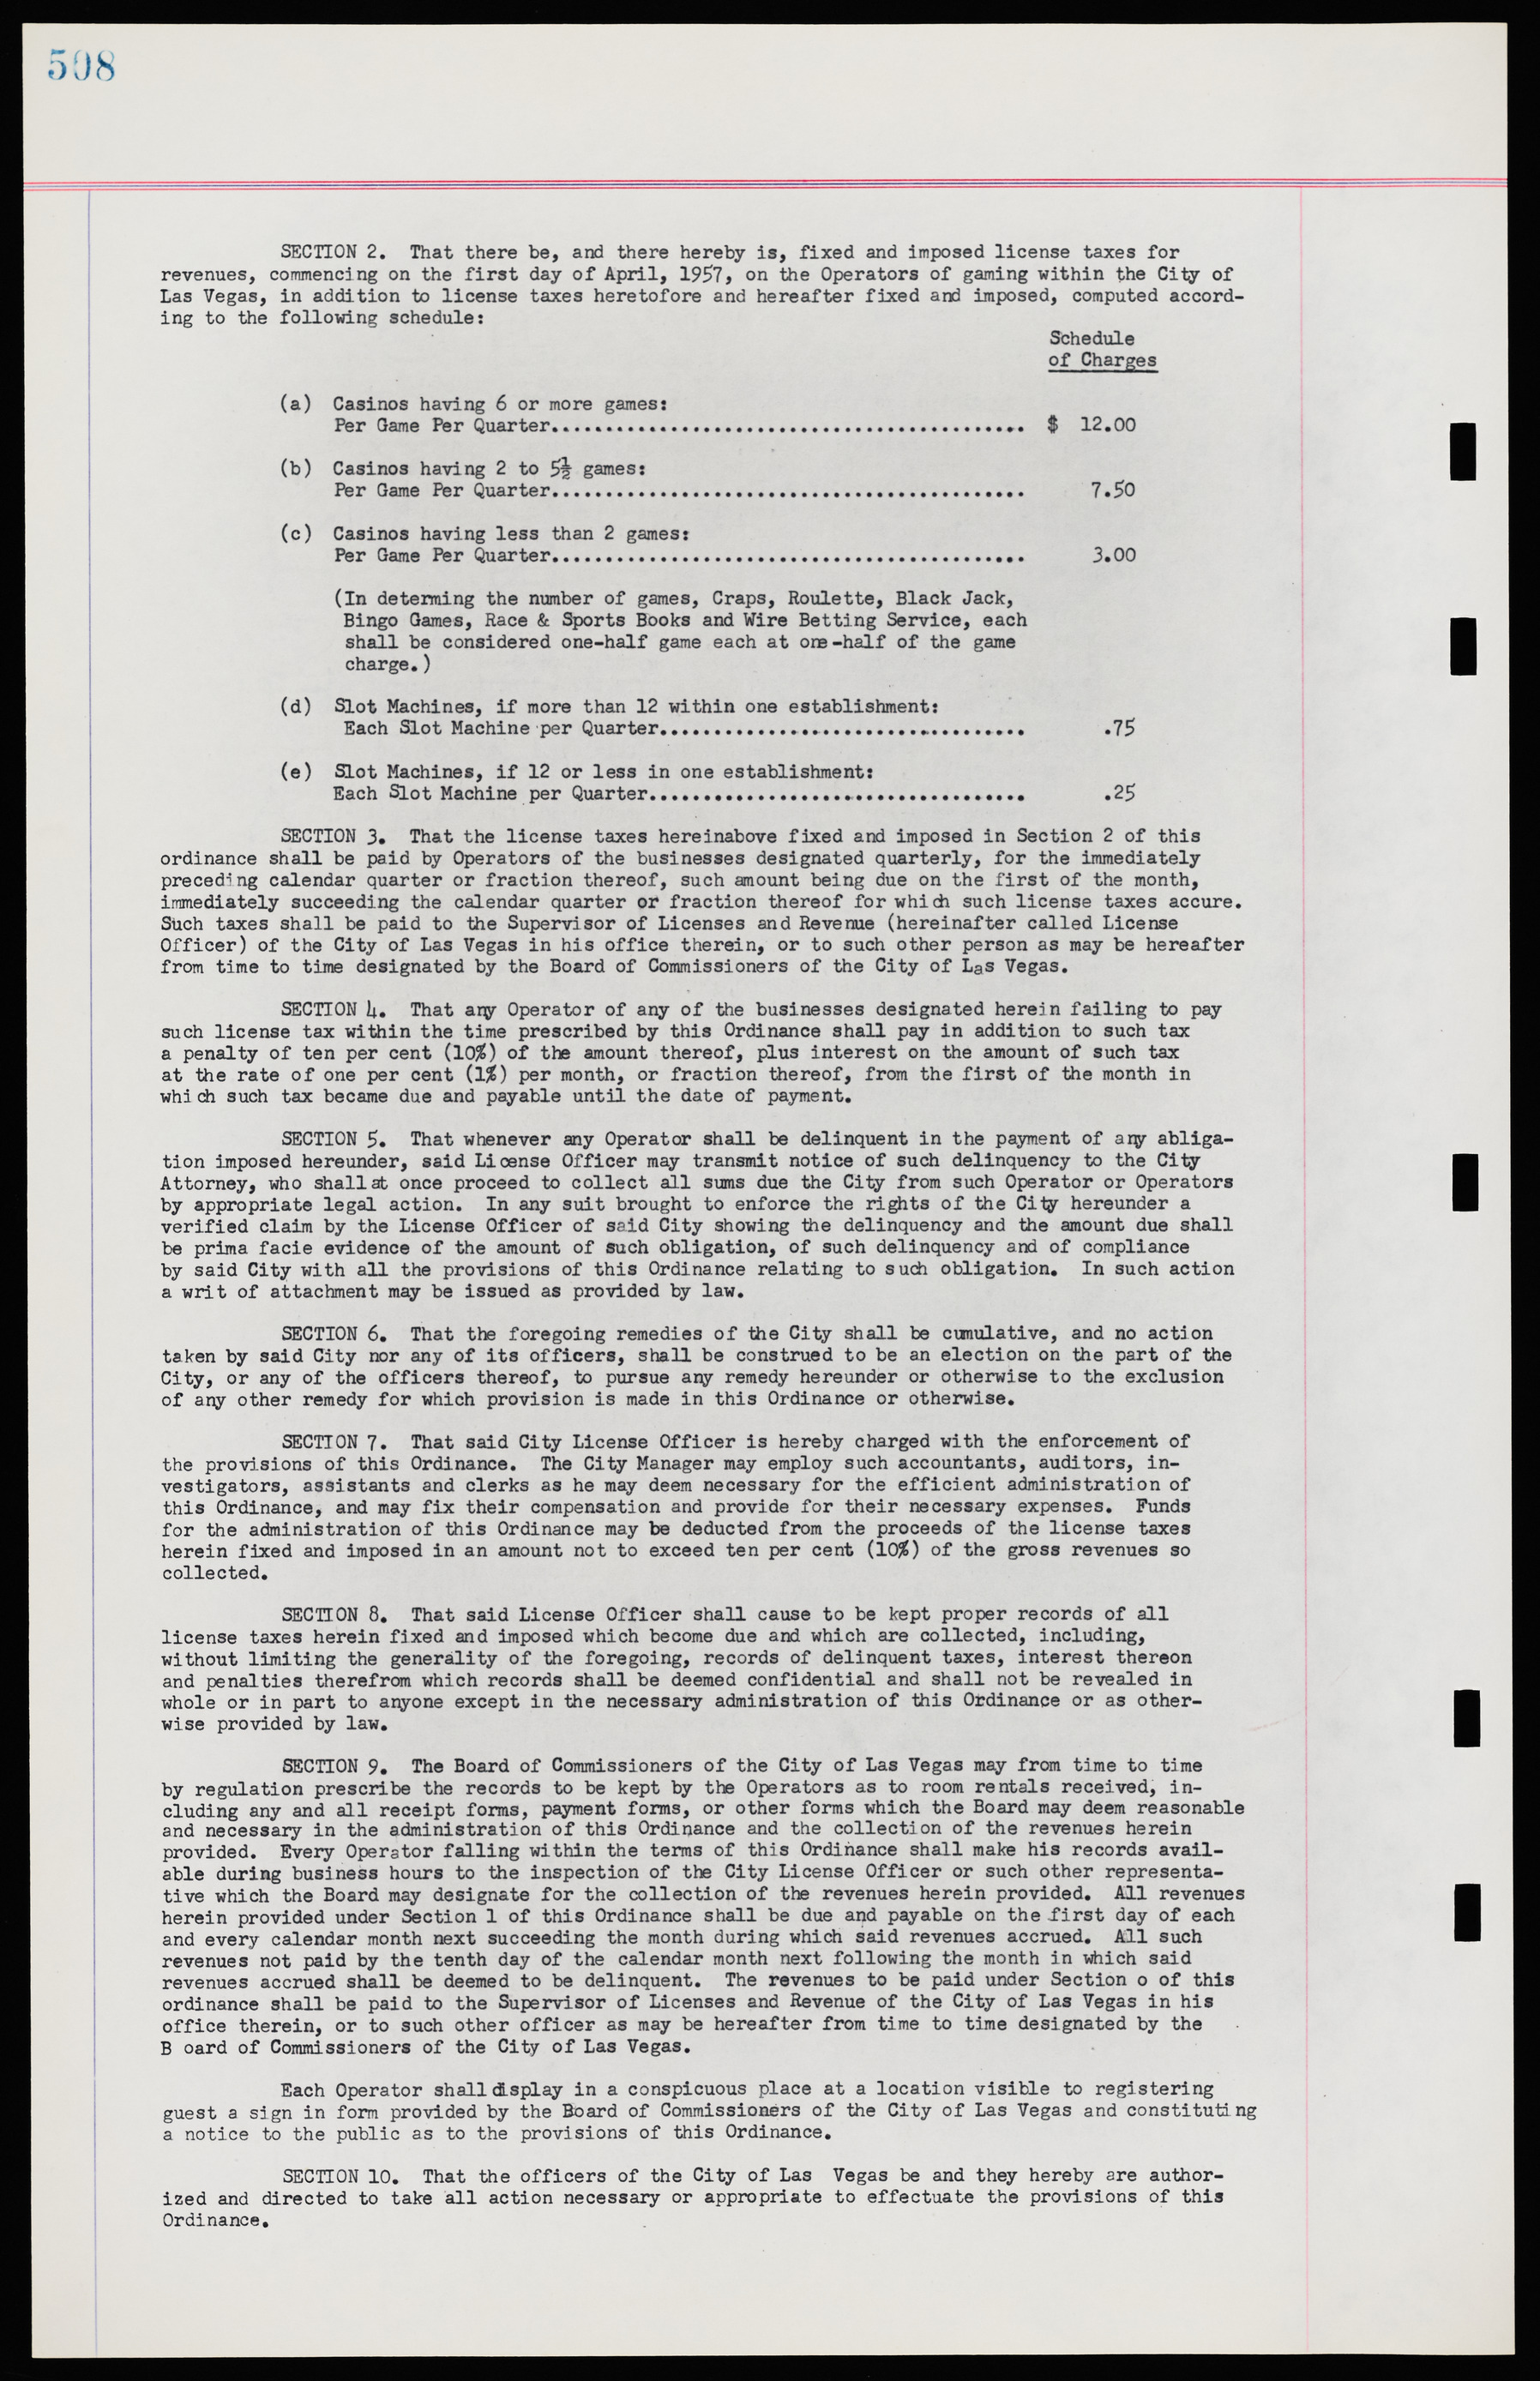 Las Vegas City Ordinances, November 13, 1950 to August 6, 1958, lvc000015-516